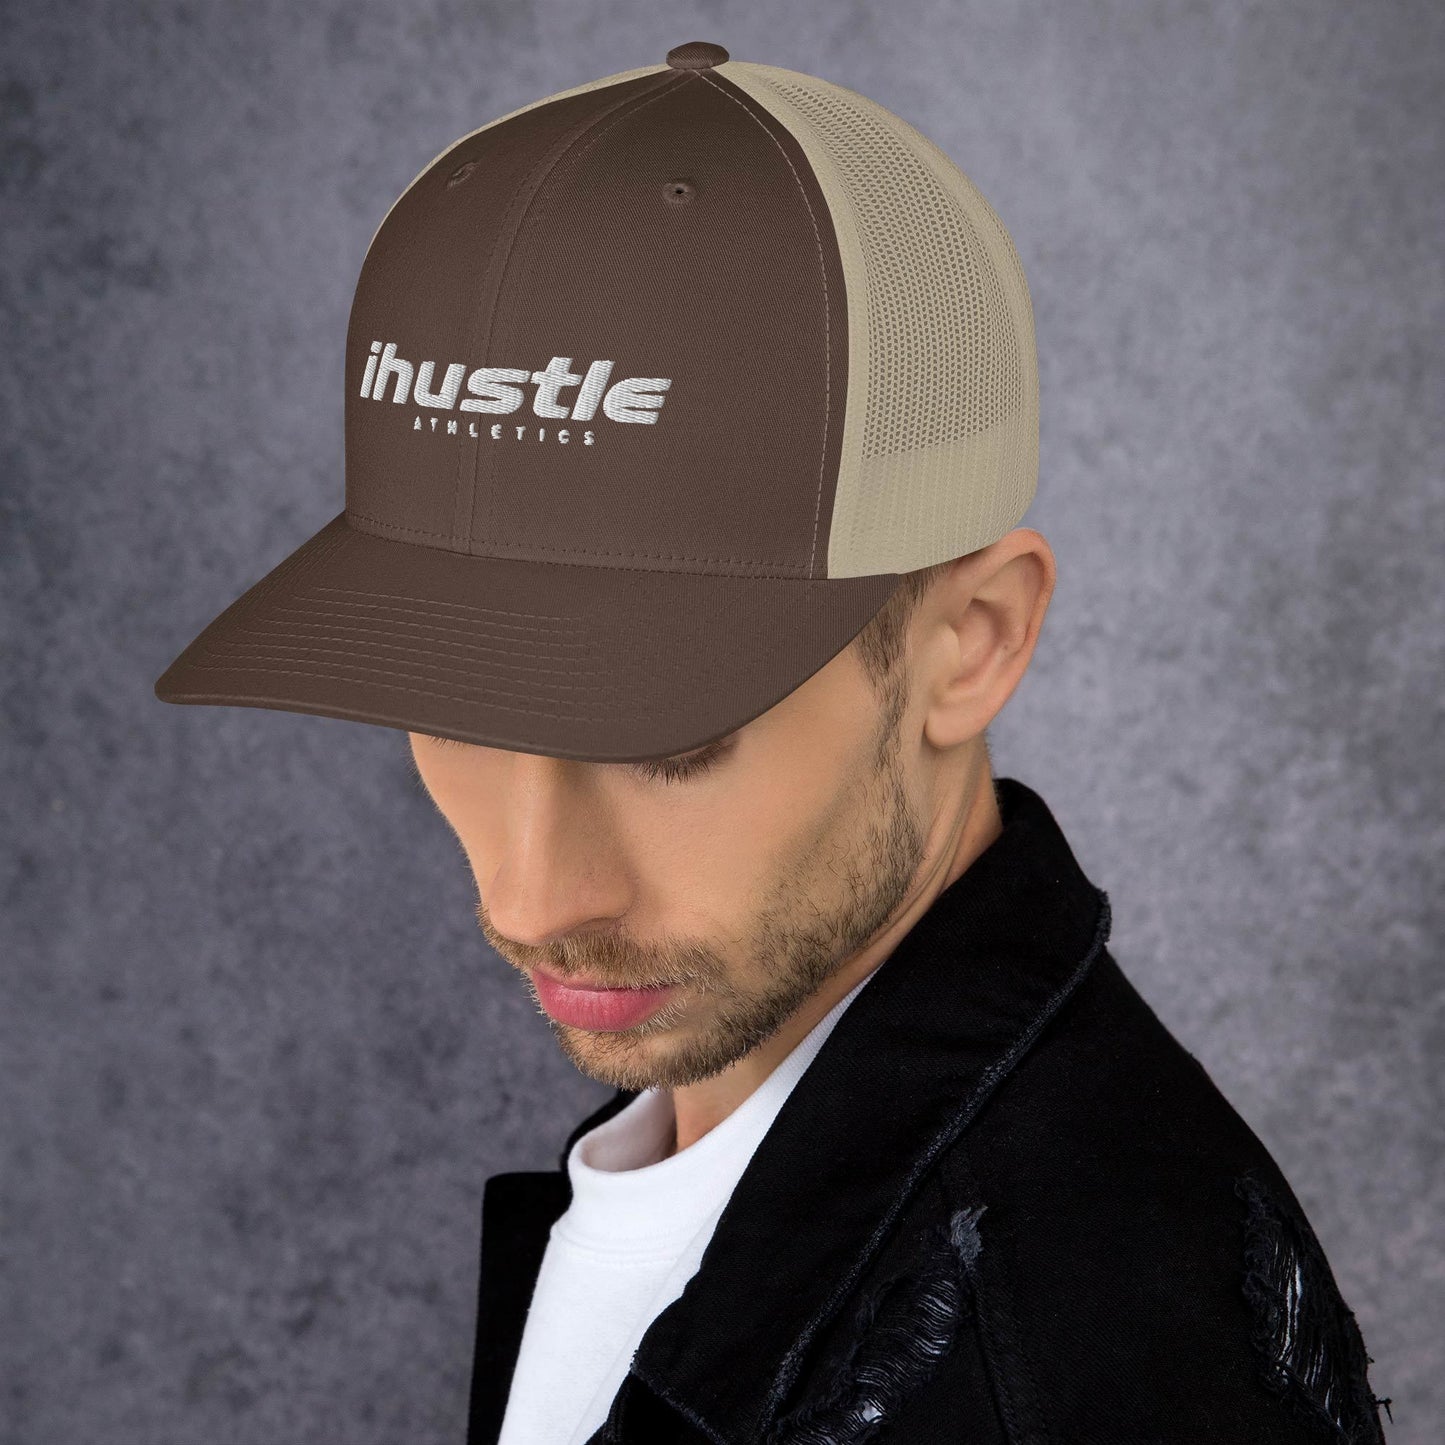 IHUSTLE - ATHLETICS - Trucker Cap